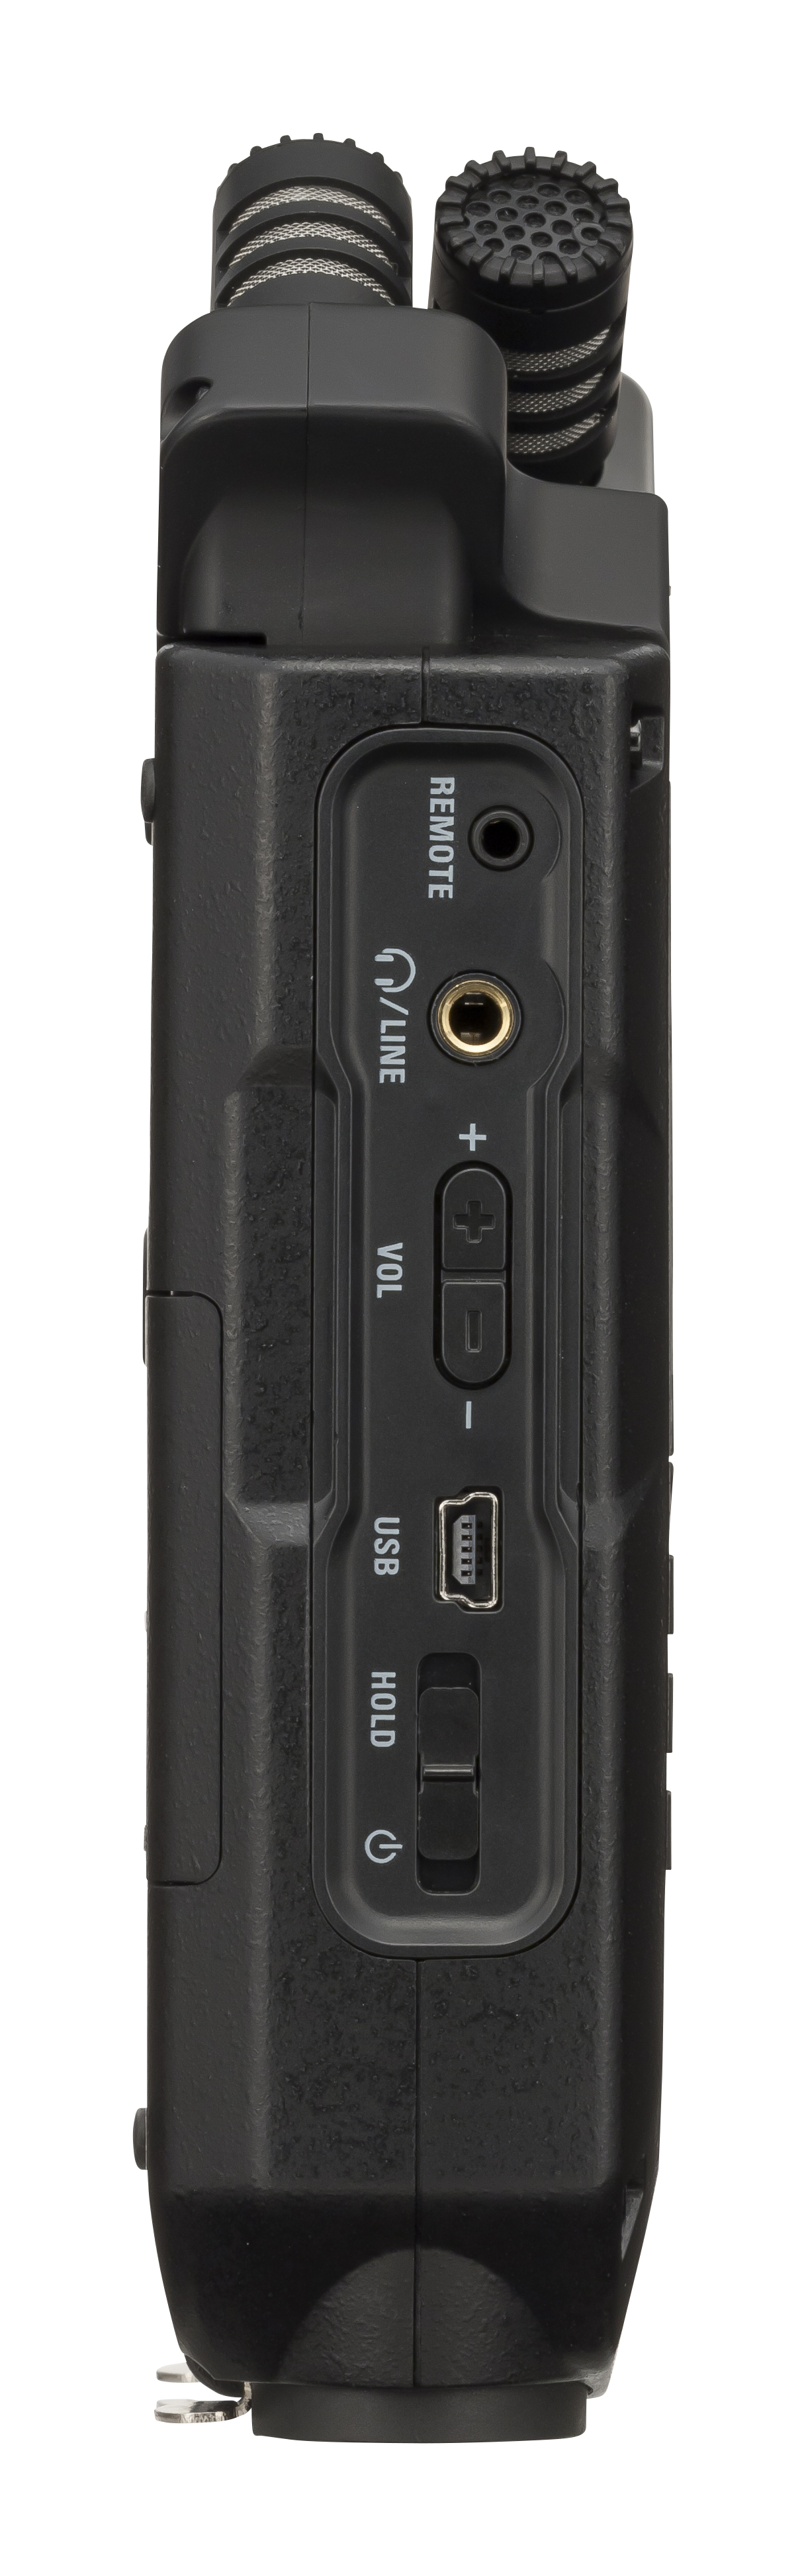 Zoom H4n Pro Black - Portable recorder - Variation 3